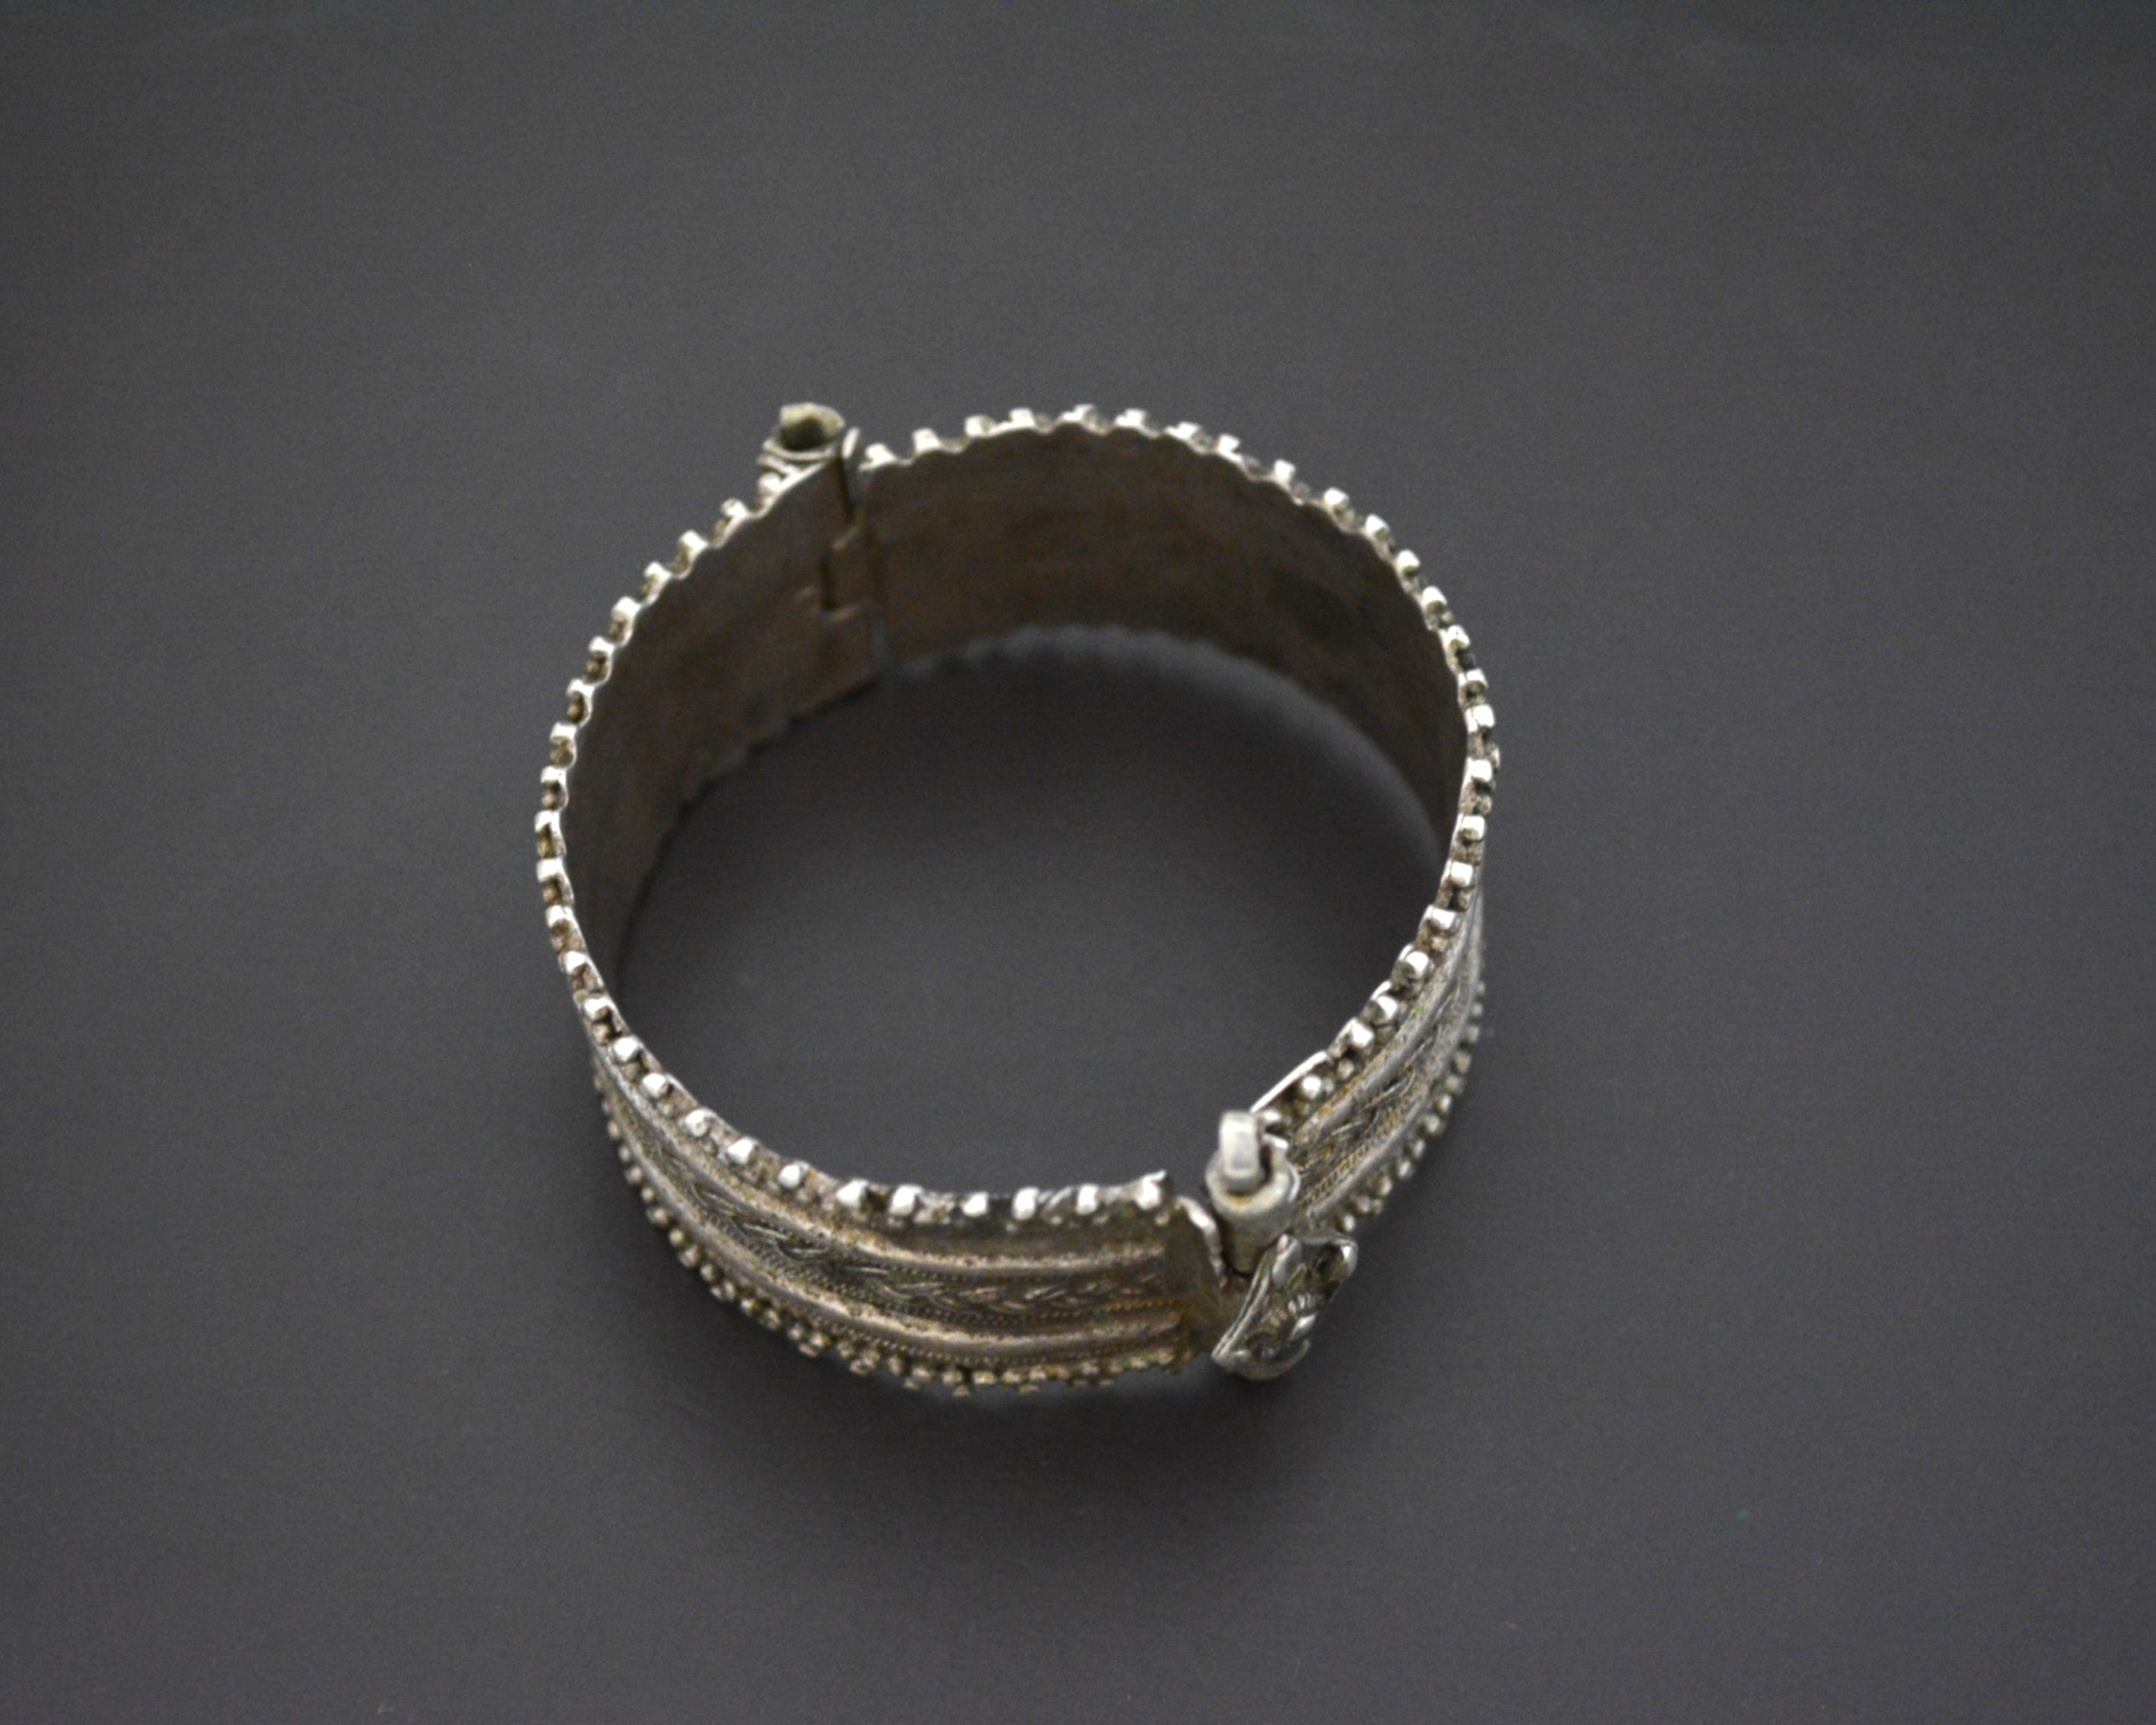 Yemeni Bedouin Silver Bracelet - Hinged - XXSmall Size